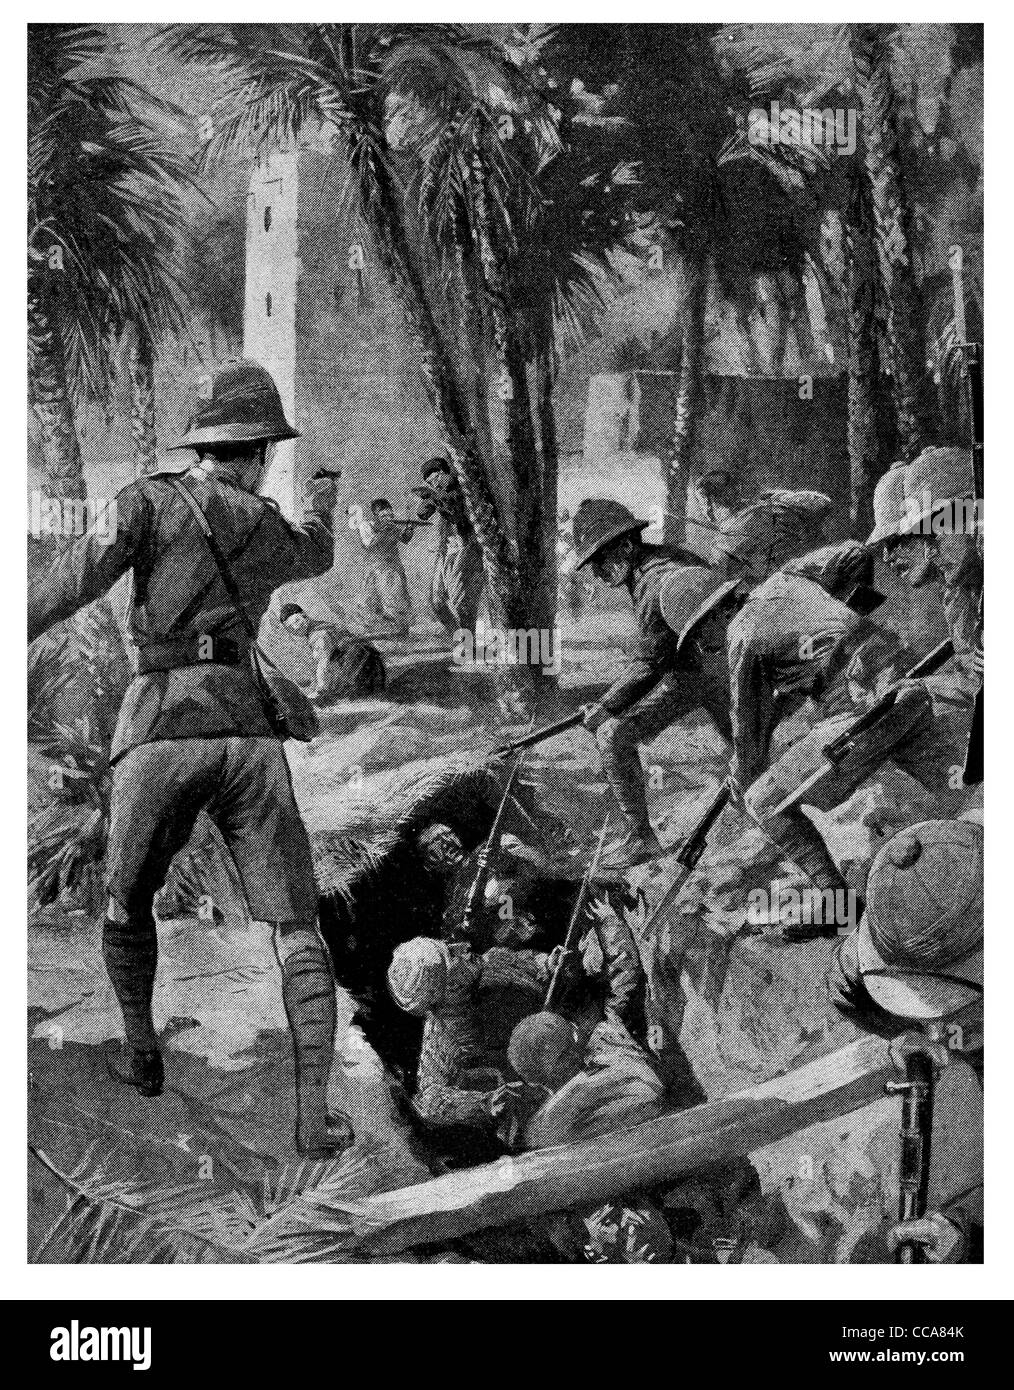 1915 West Kents capture Nasiriyah July 24th Bayonet attack Turks trench rifle bayonet officer pistol Iraq hand to hand combat Stock Photo